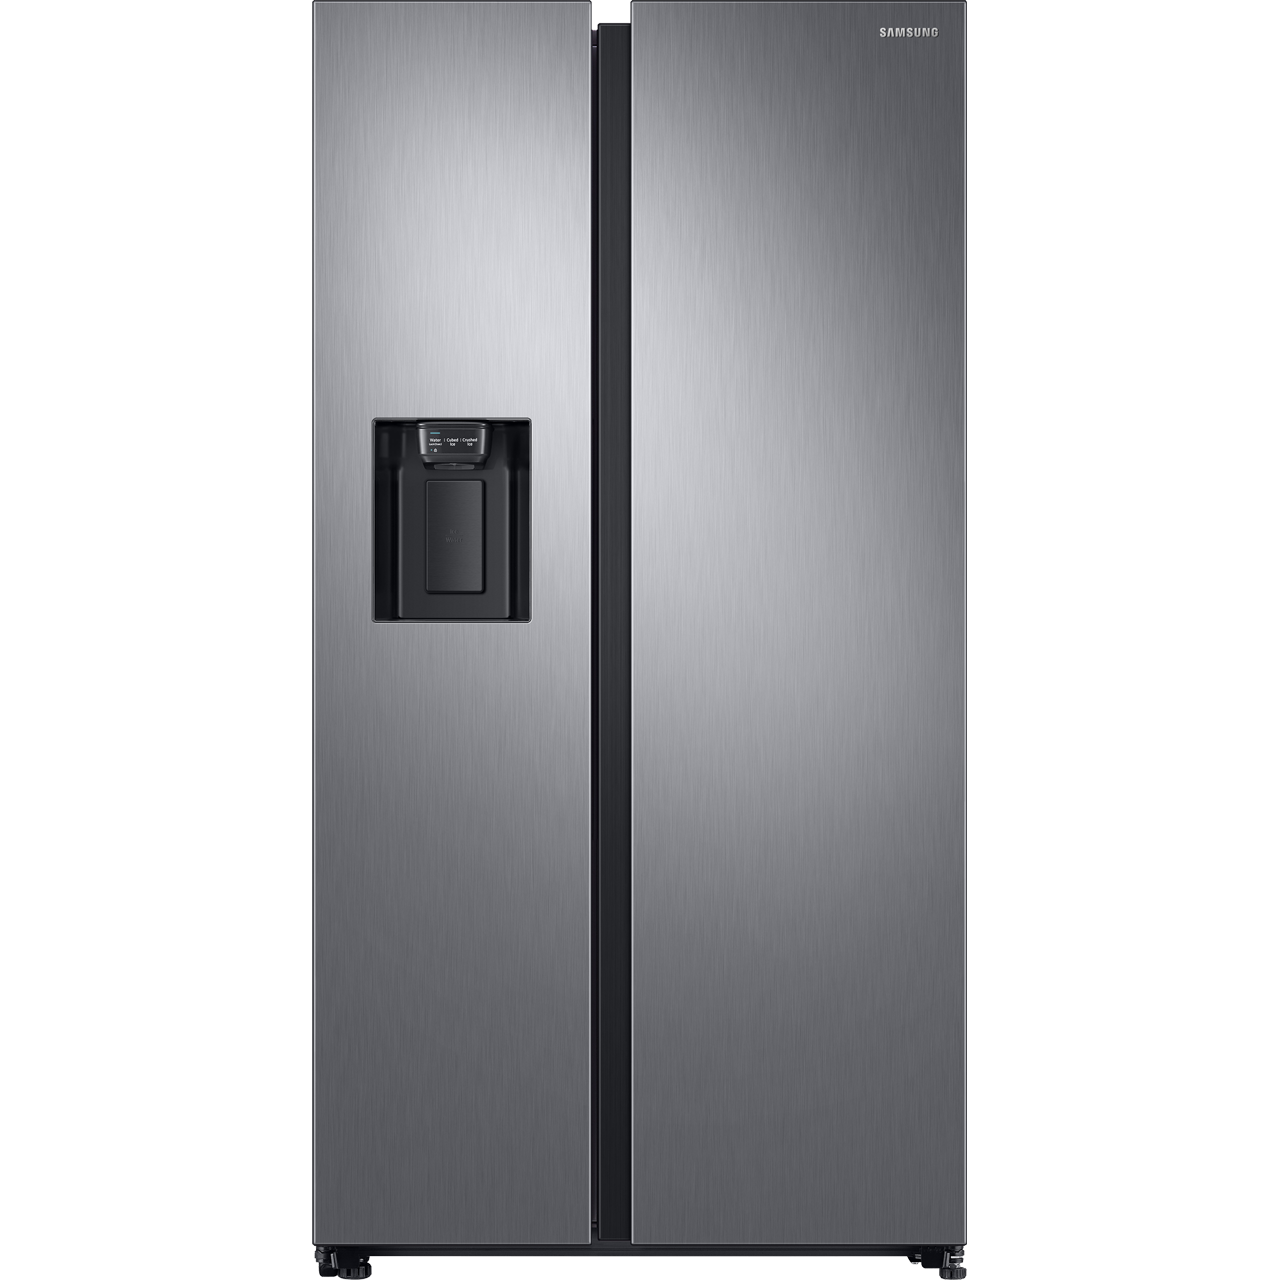 Samsung RS8000 RS68N8240S9 American Fridge Freezer Review